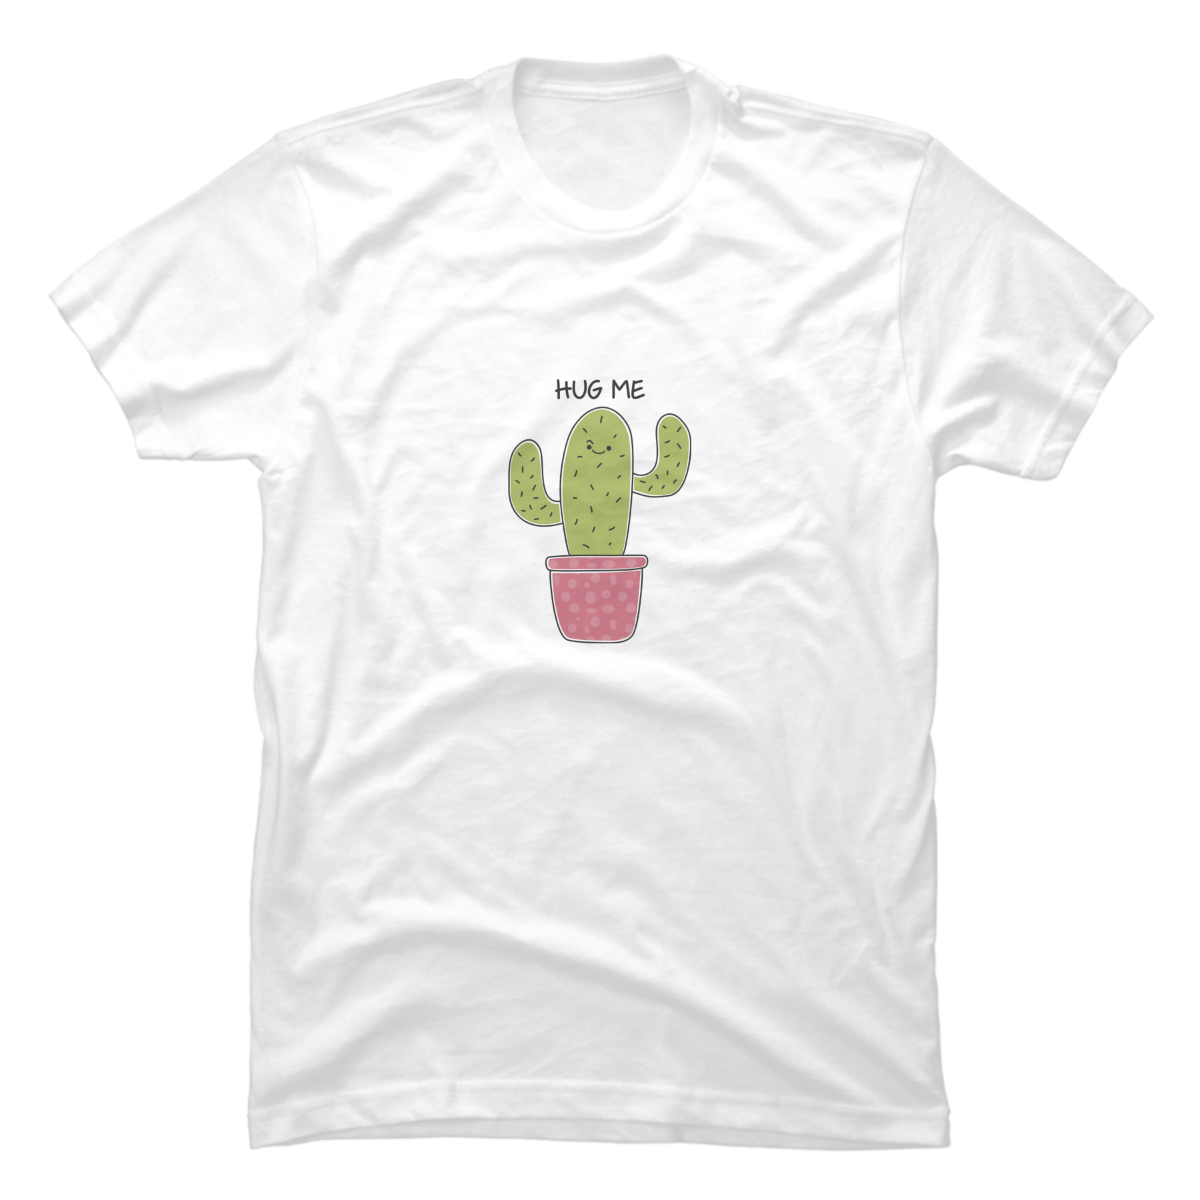 hug me cactus shirt